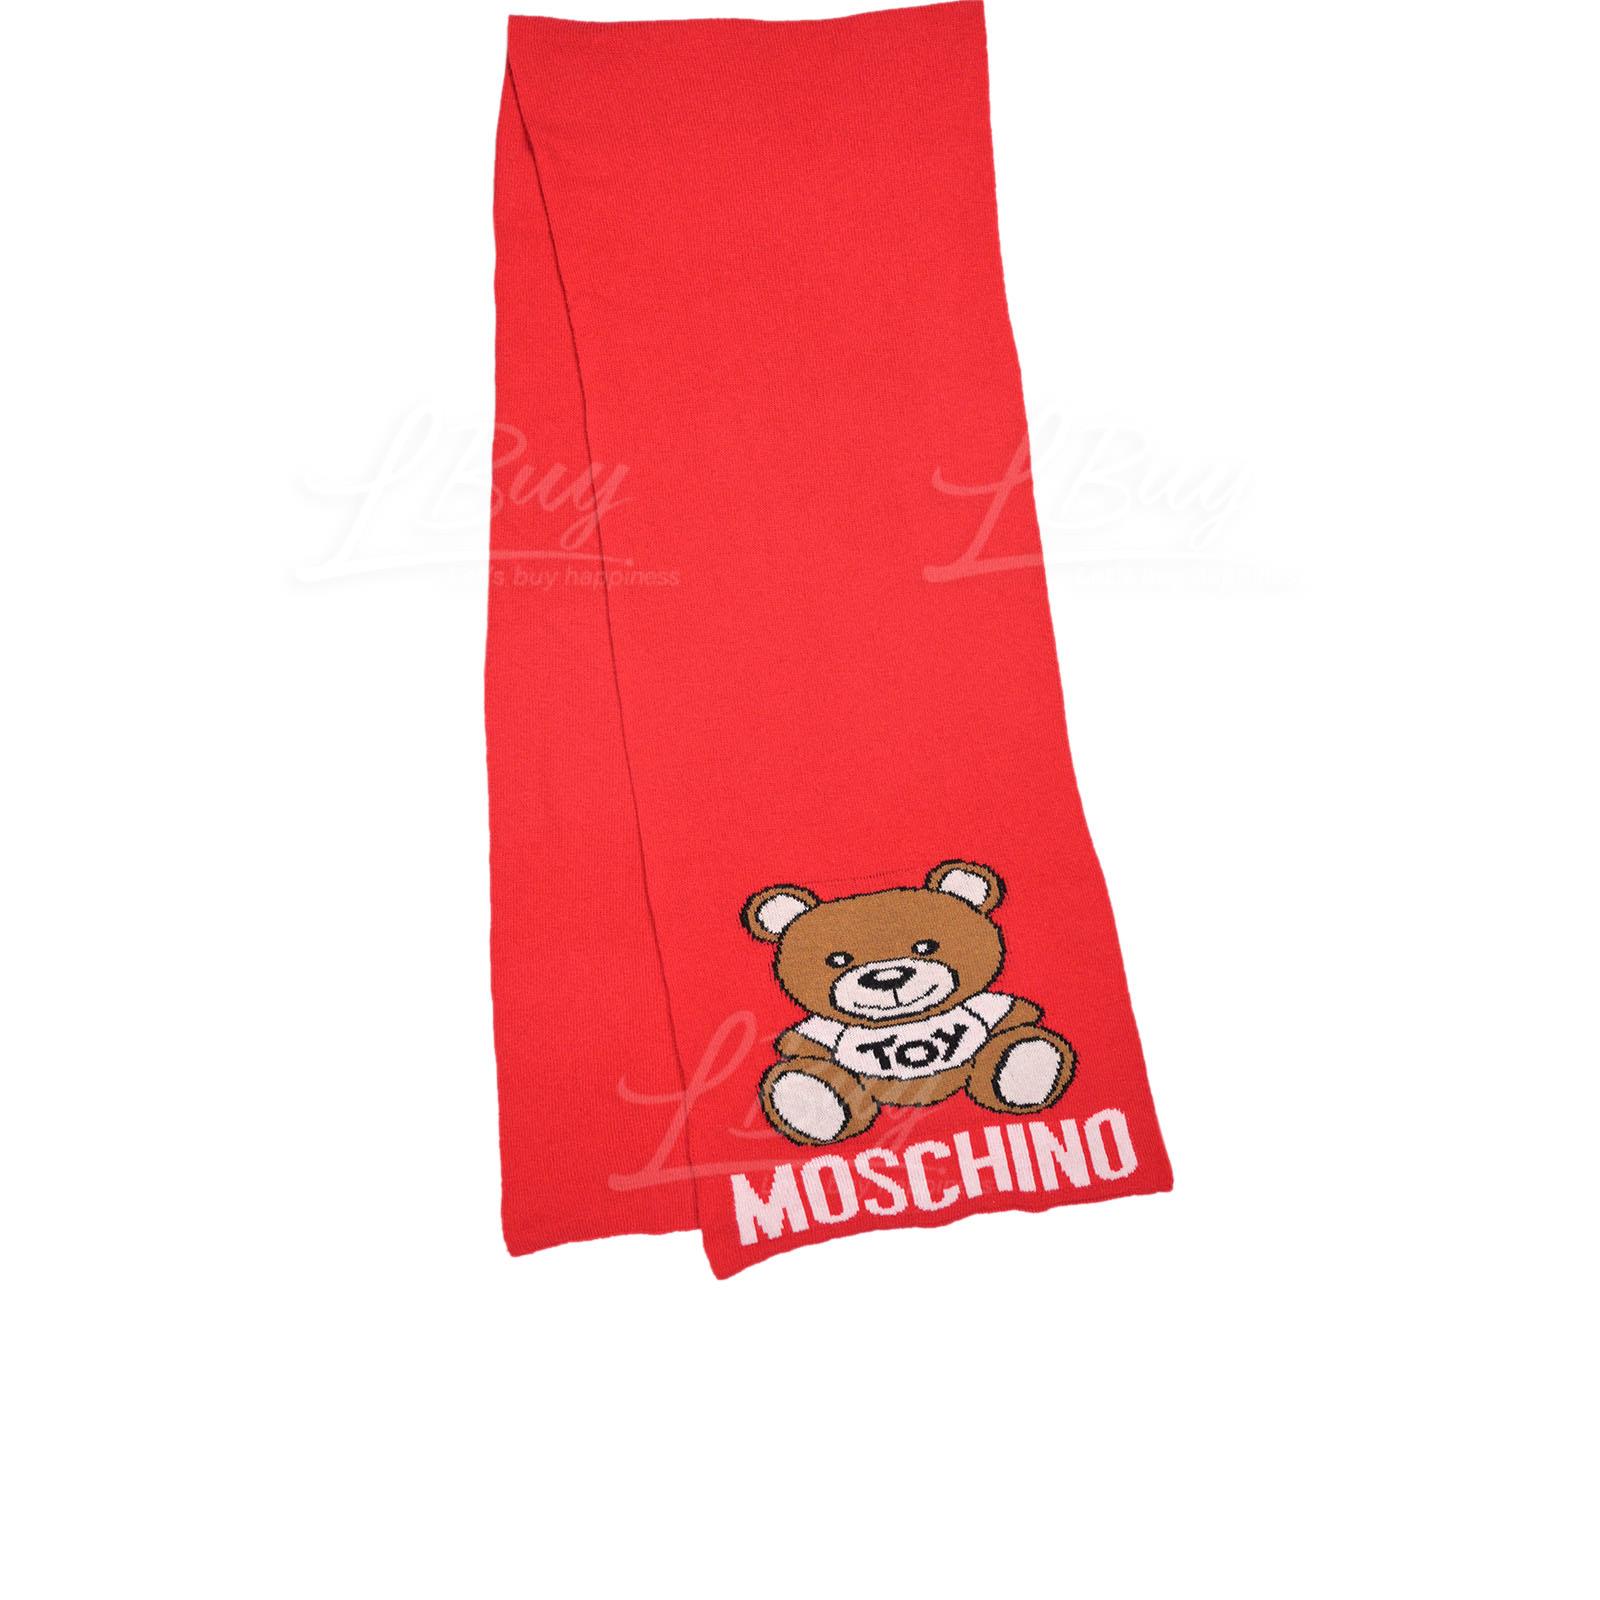 Moschino 大泰迪熊紅色圍巾/頸巾